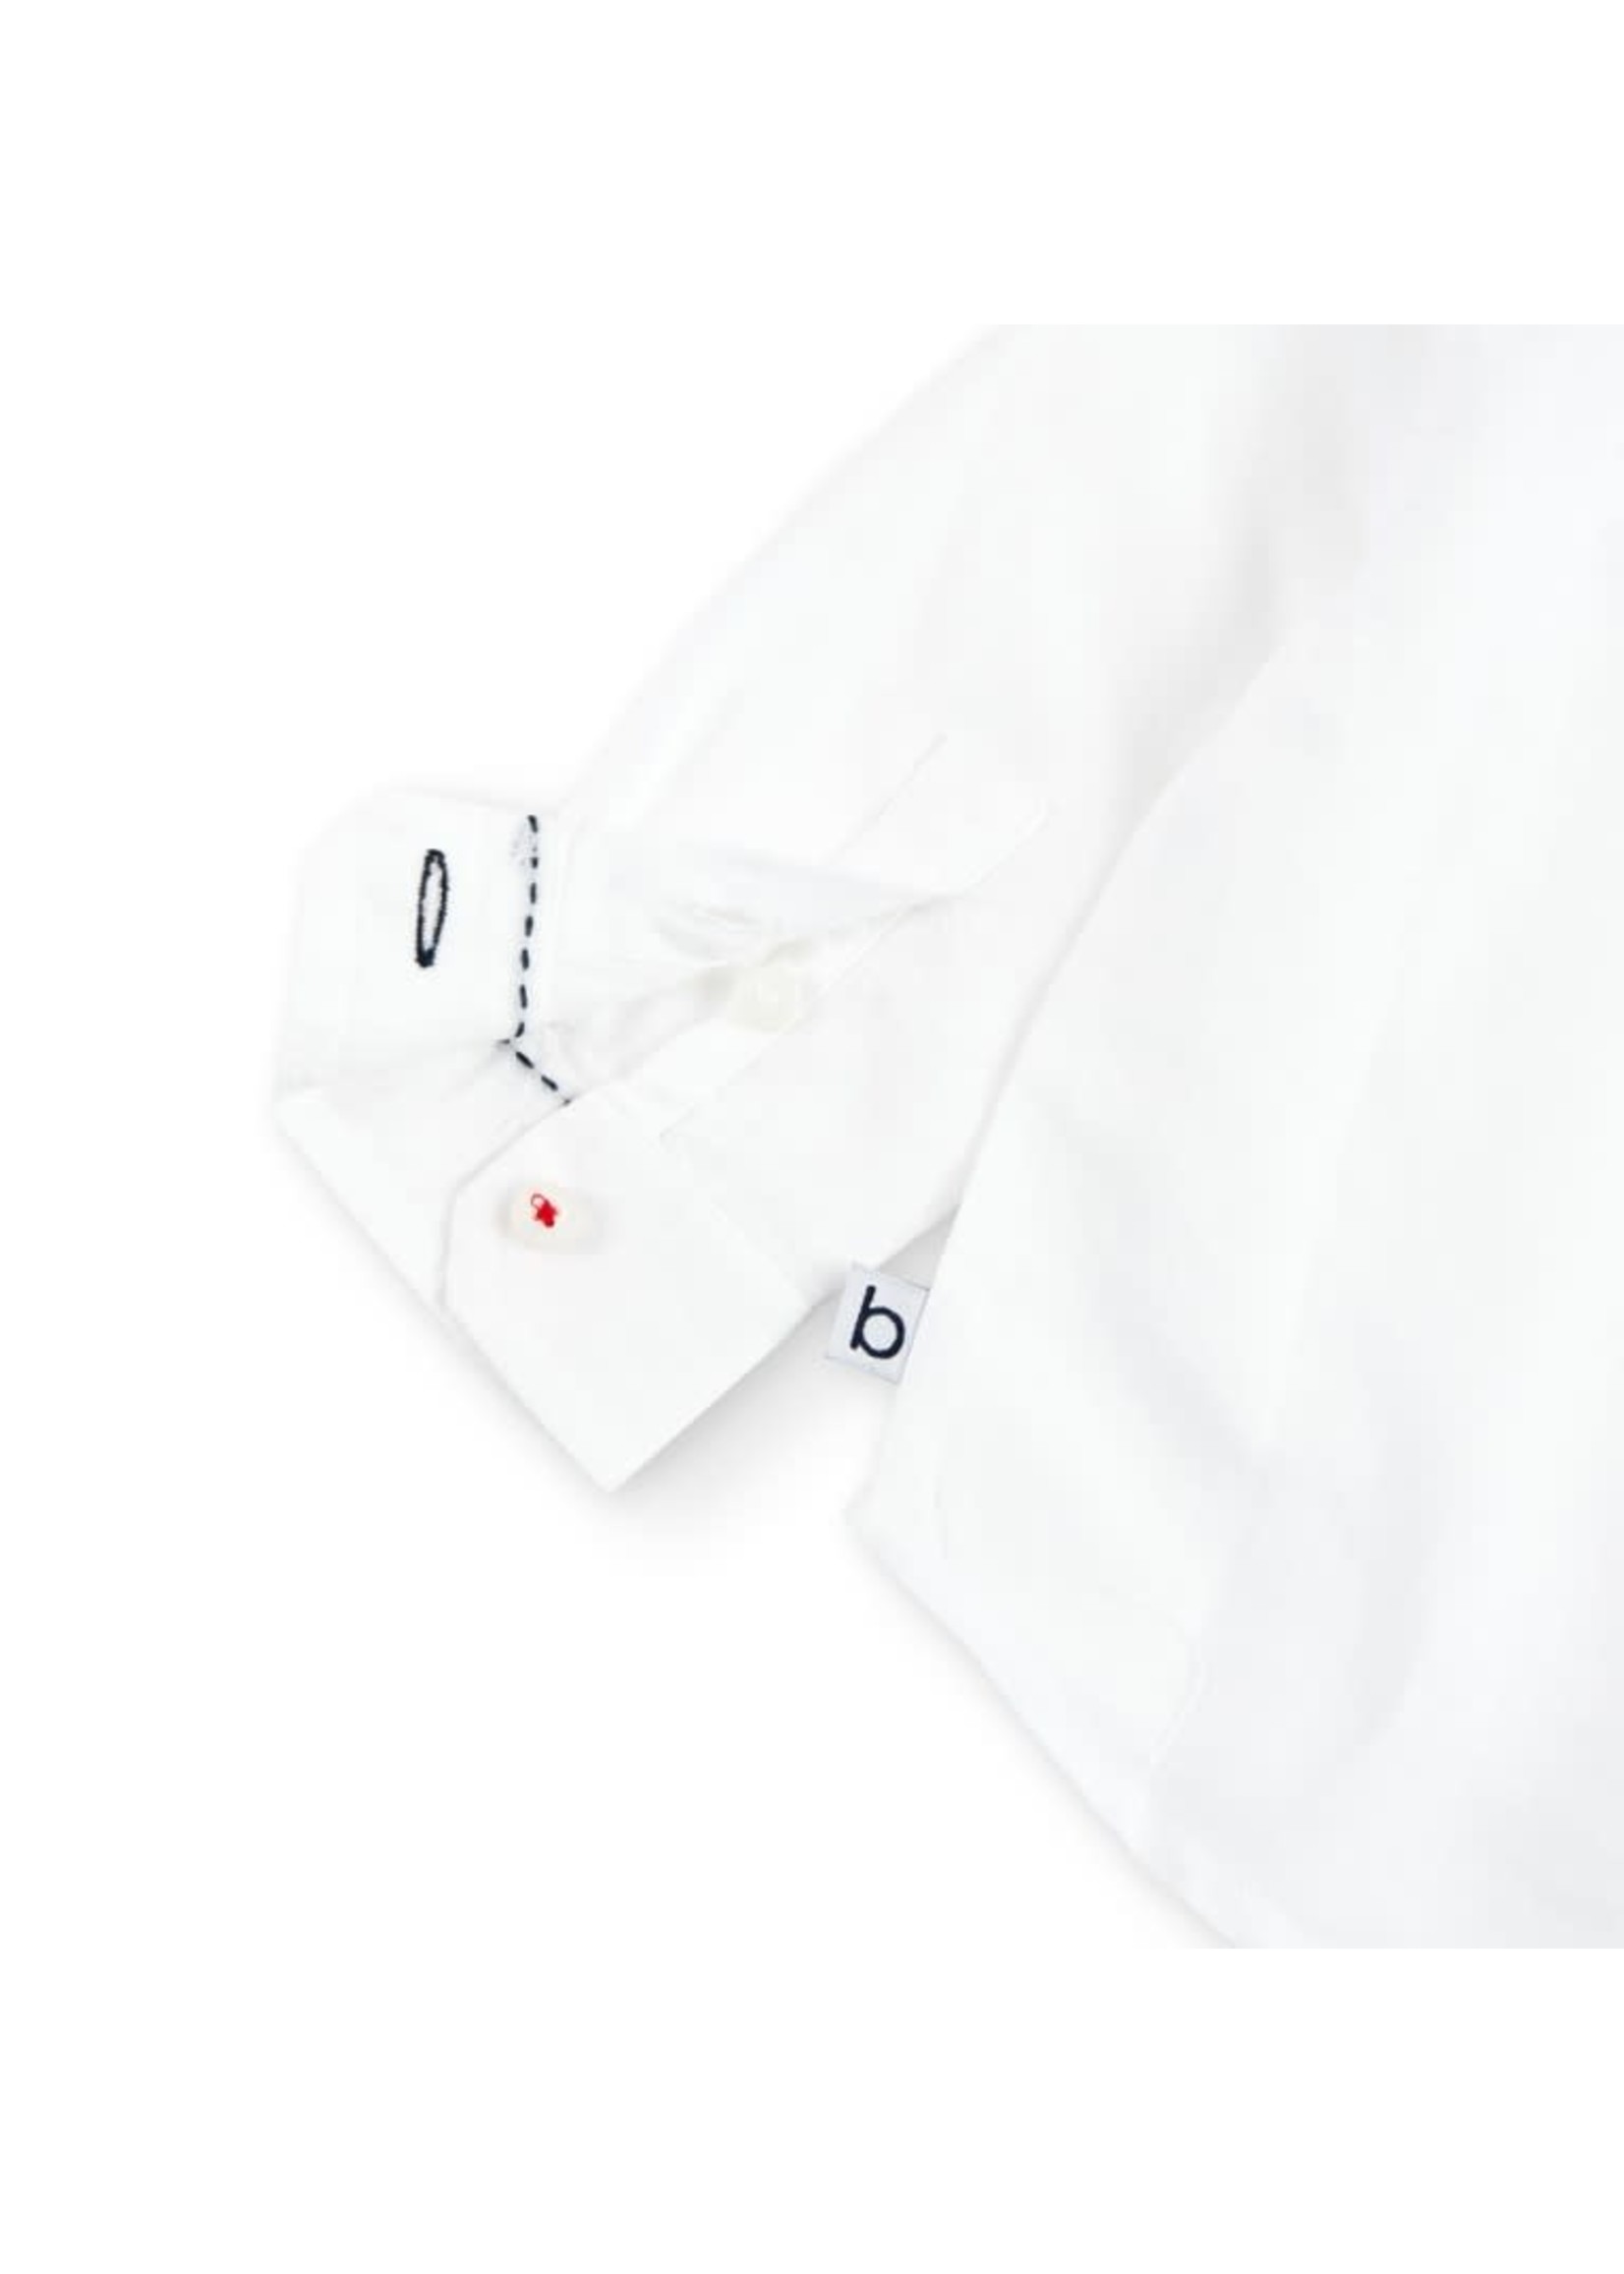 Boboli Linen shirt long sleeves for baby boy WHITE 716240B